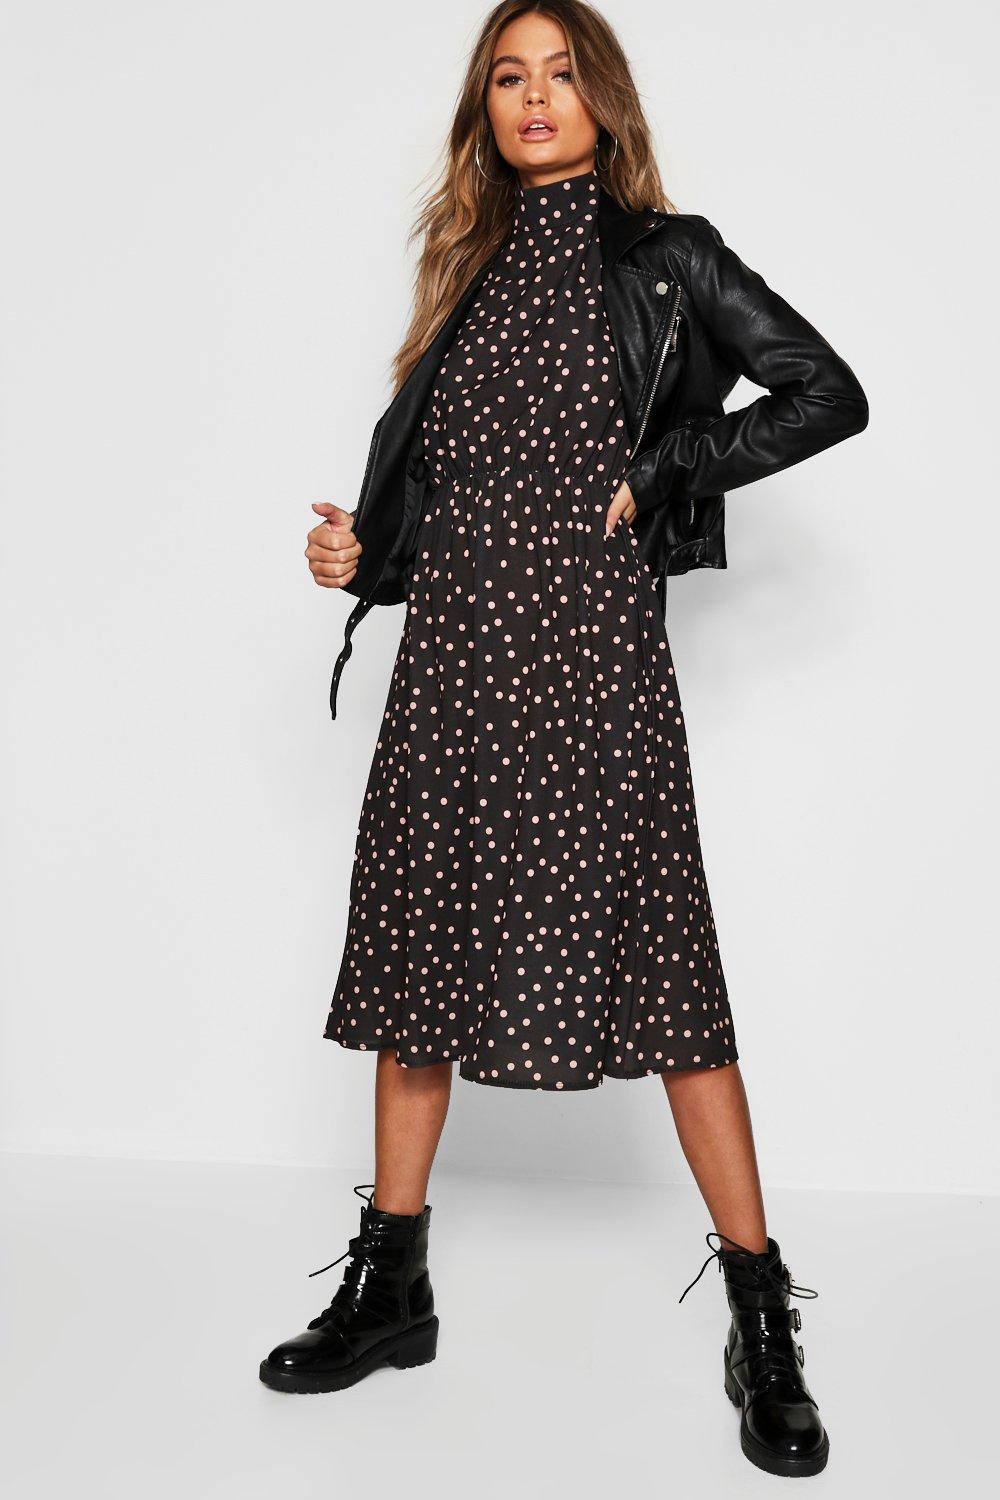 polka dot dress with leather jacket